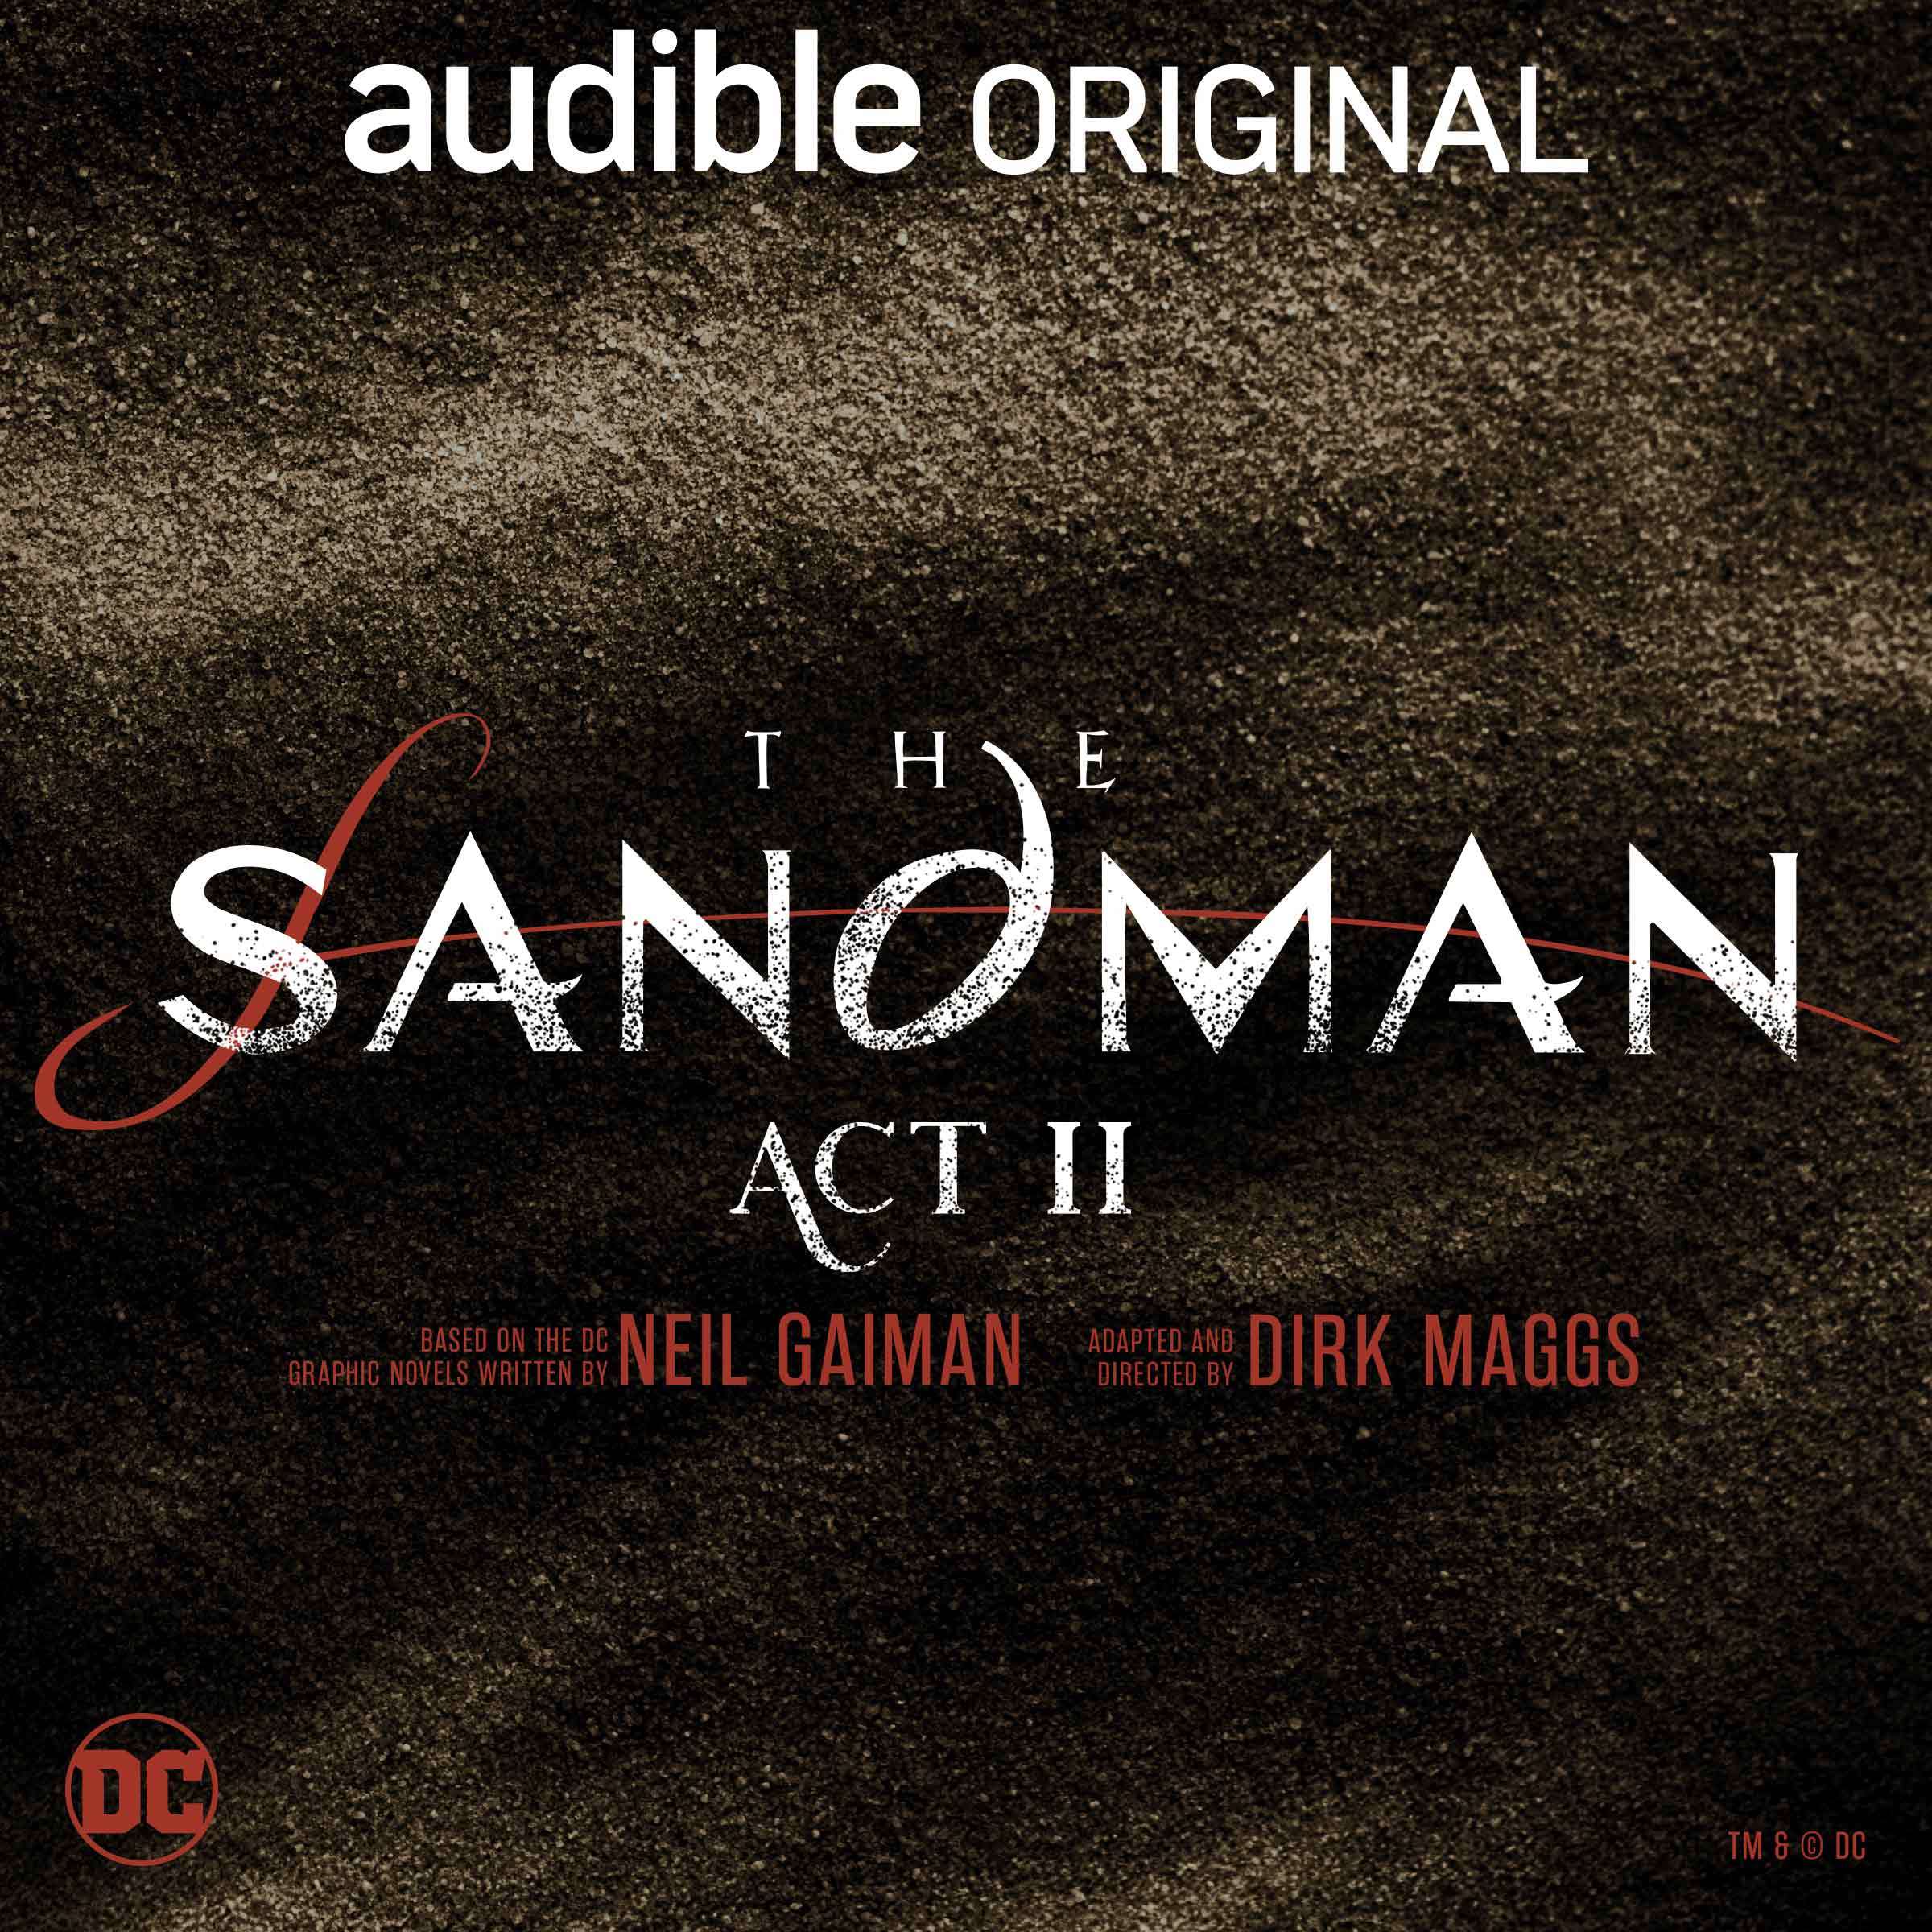 The Sandman Act II cover art